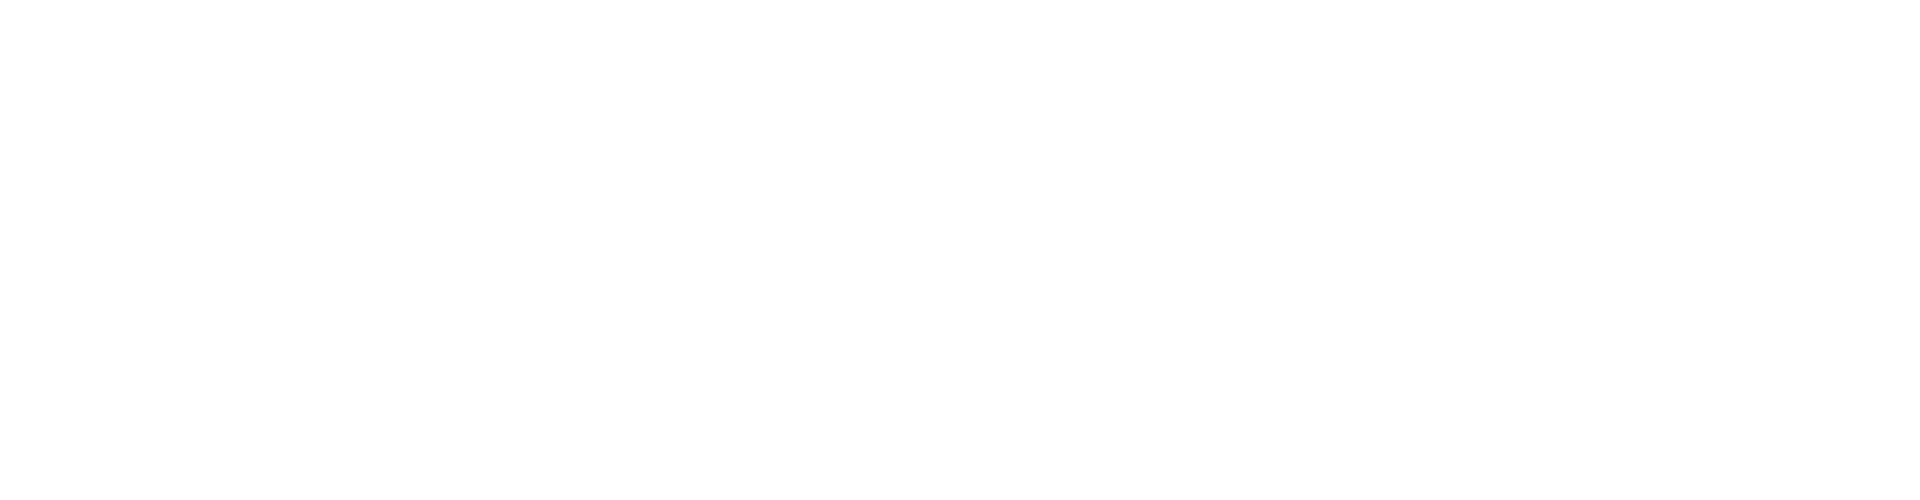 The Scuffed Series 5 - Dicing Math